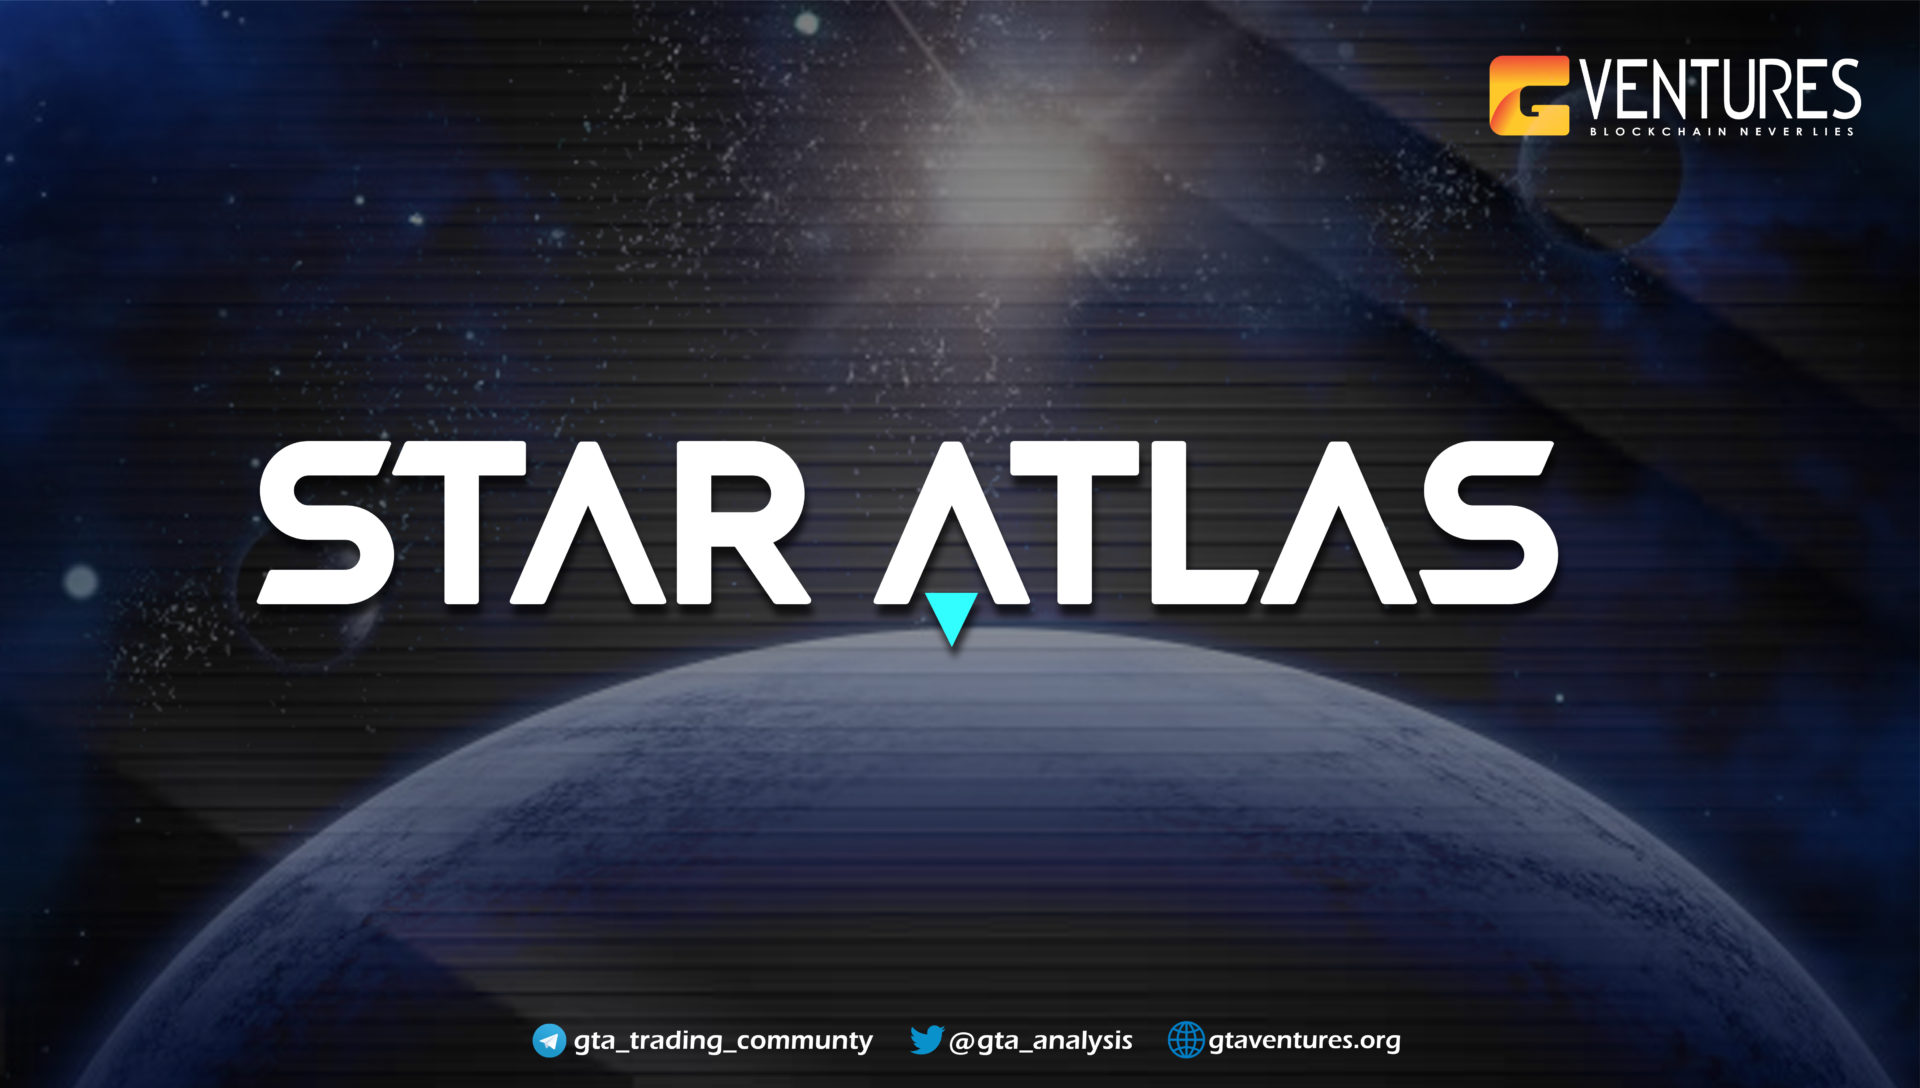 download the last version for iphoneStar Atlas